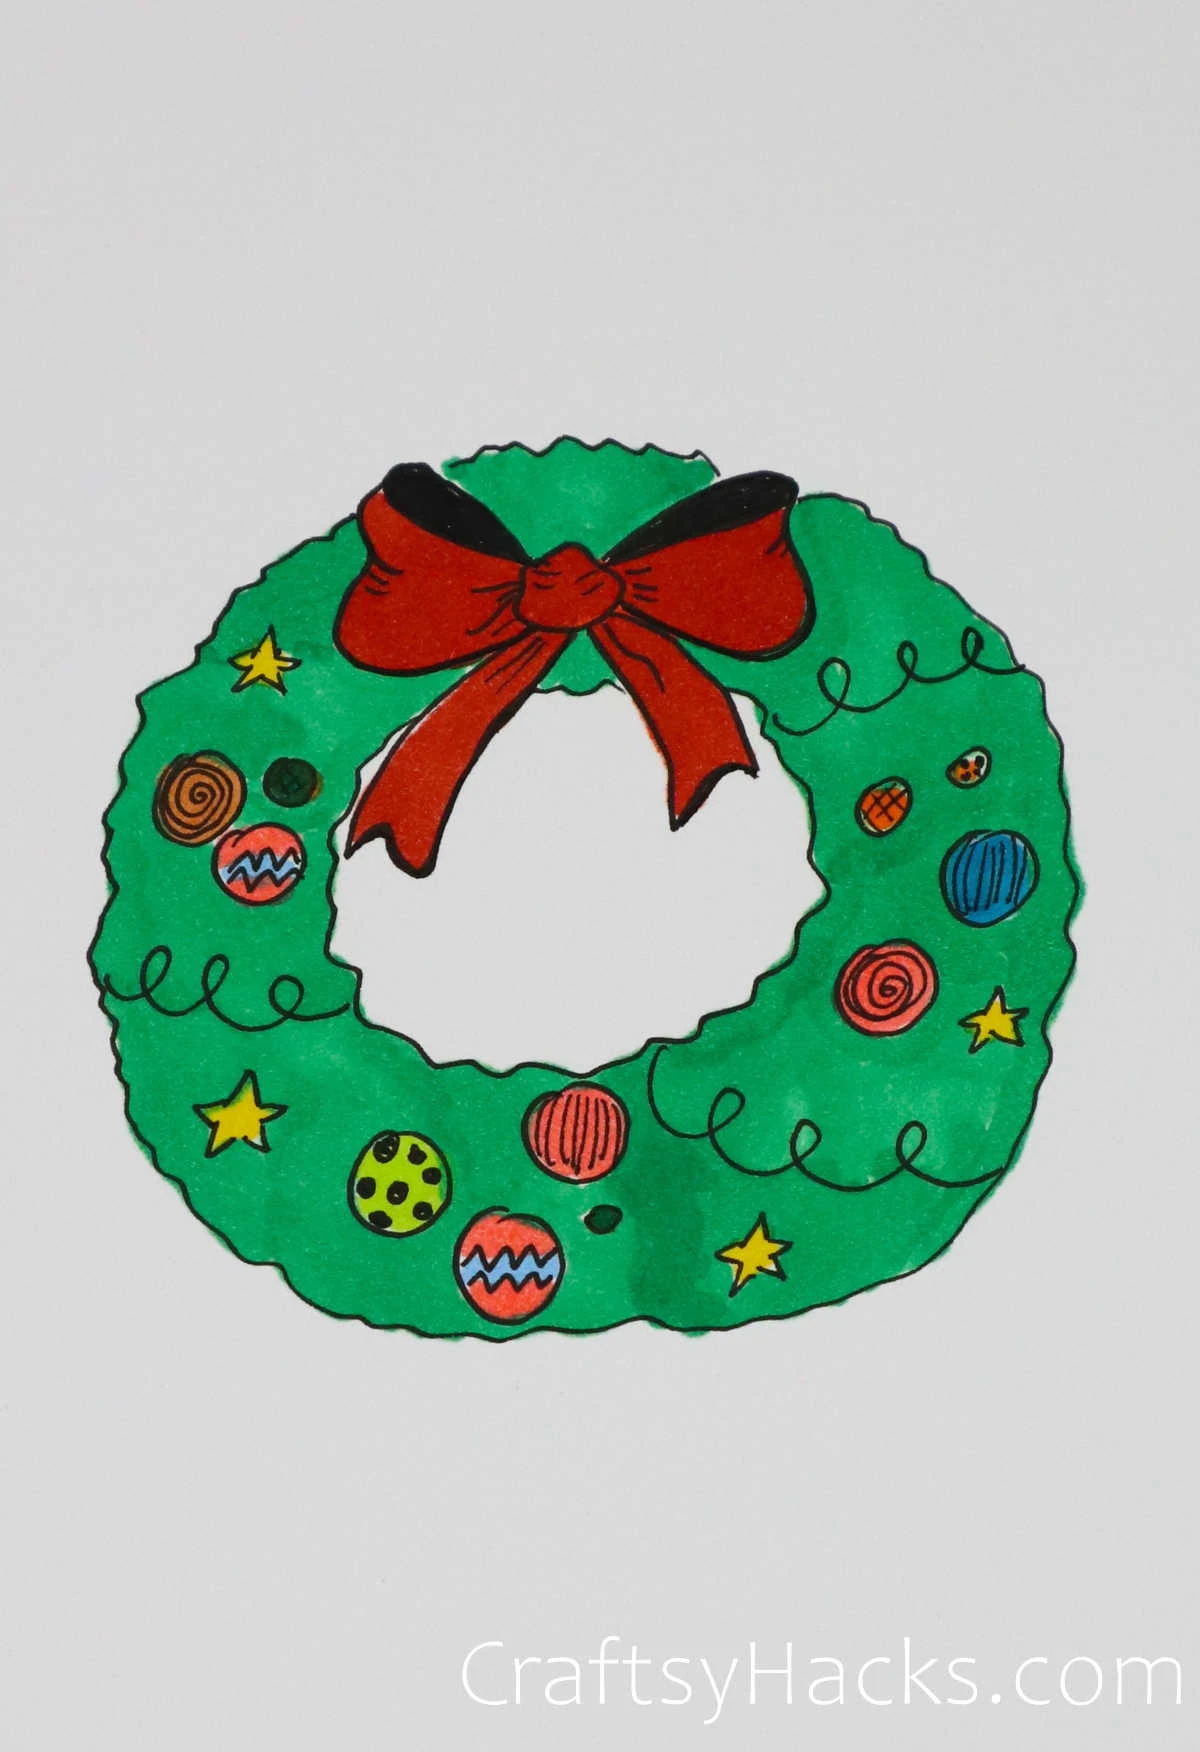 fun and festive wreath